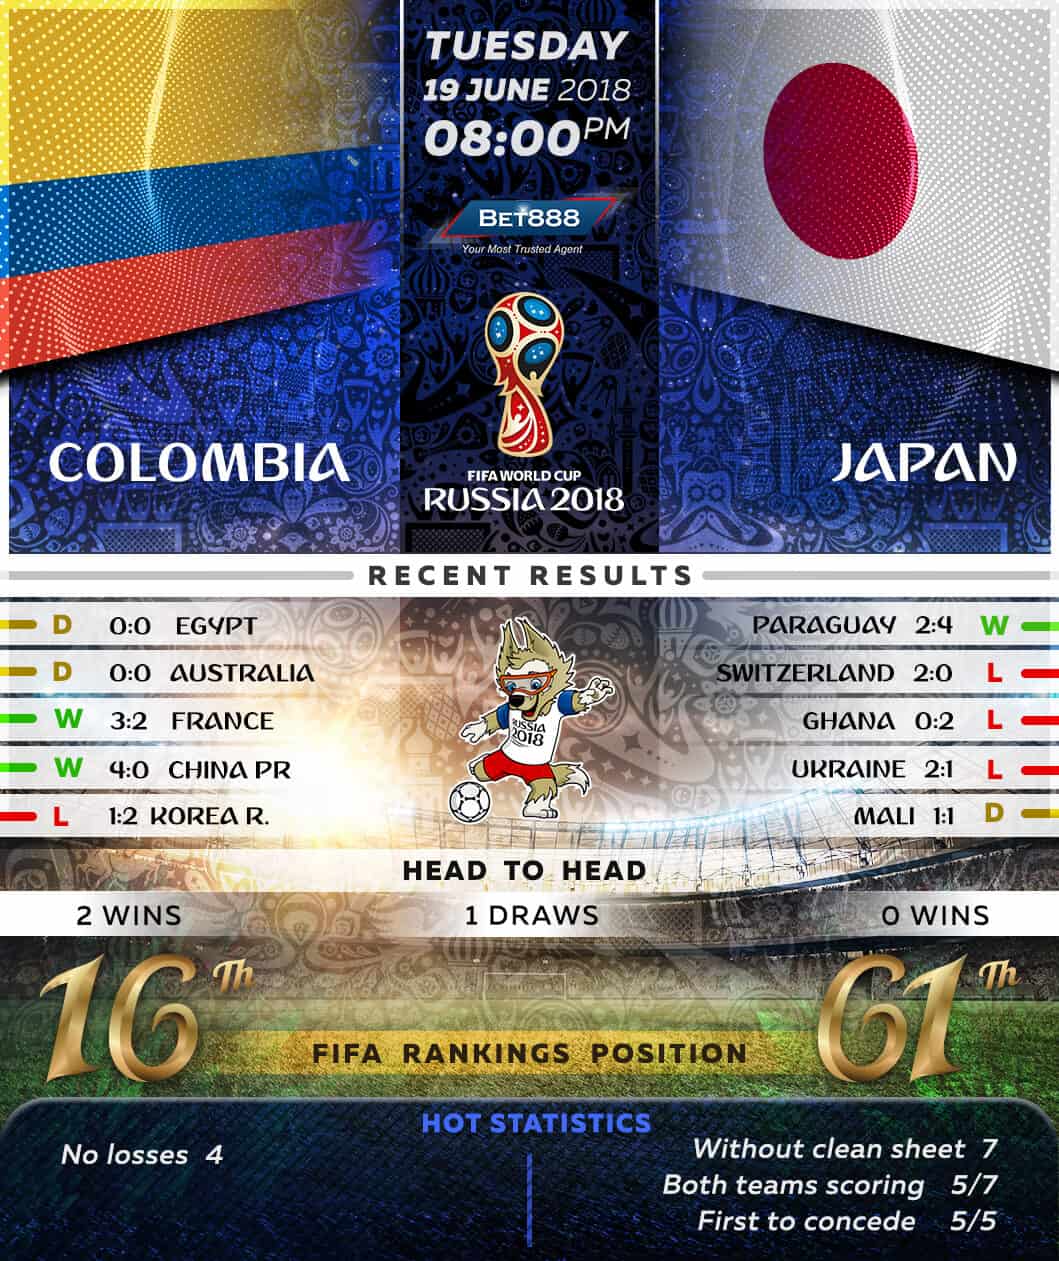 Colombia vs Japan 19/06/18